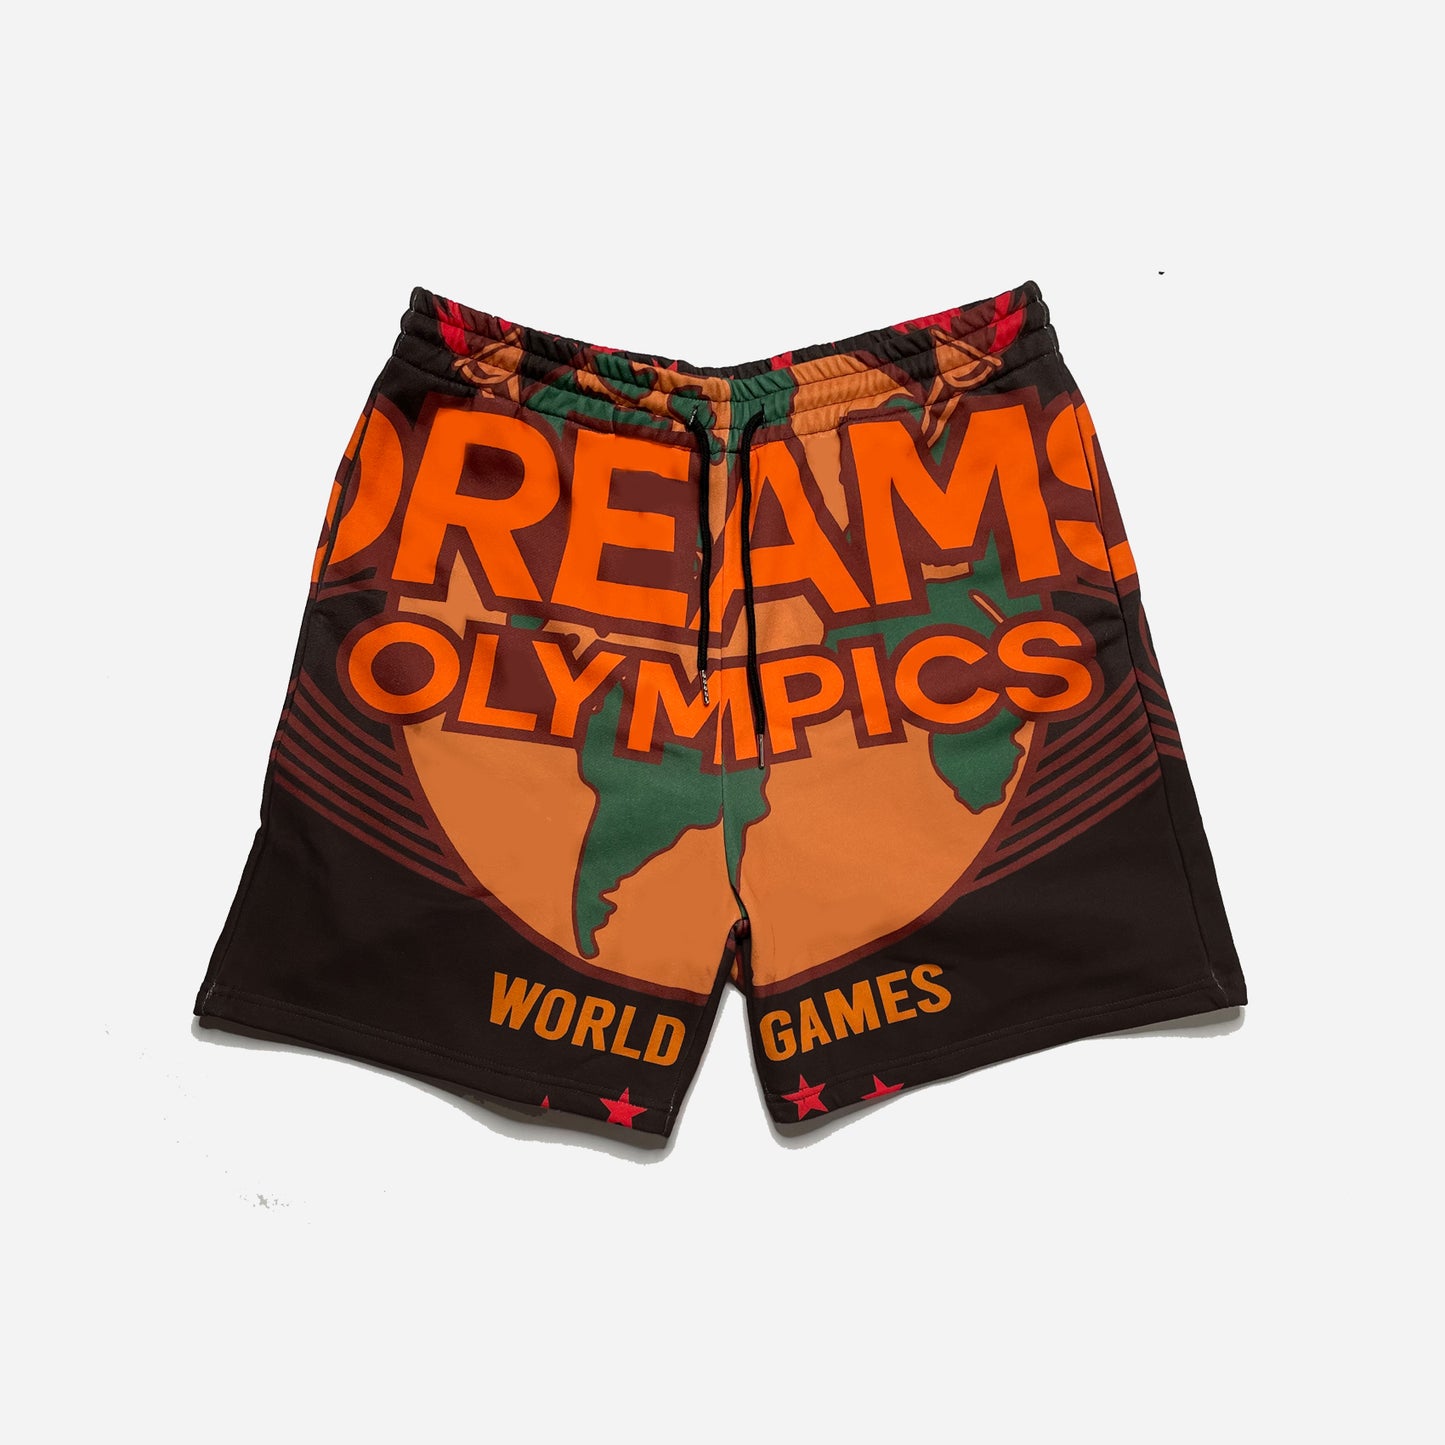 Dreams Olympics All Over Shorts